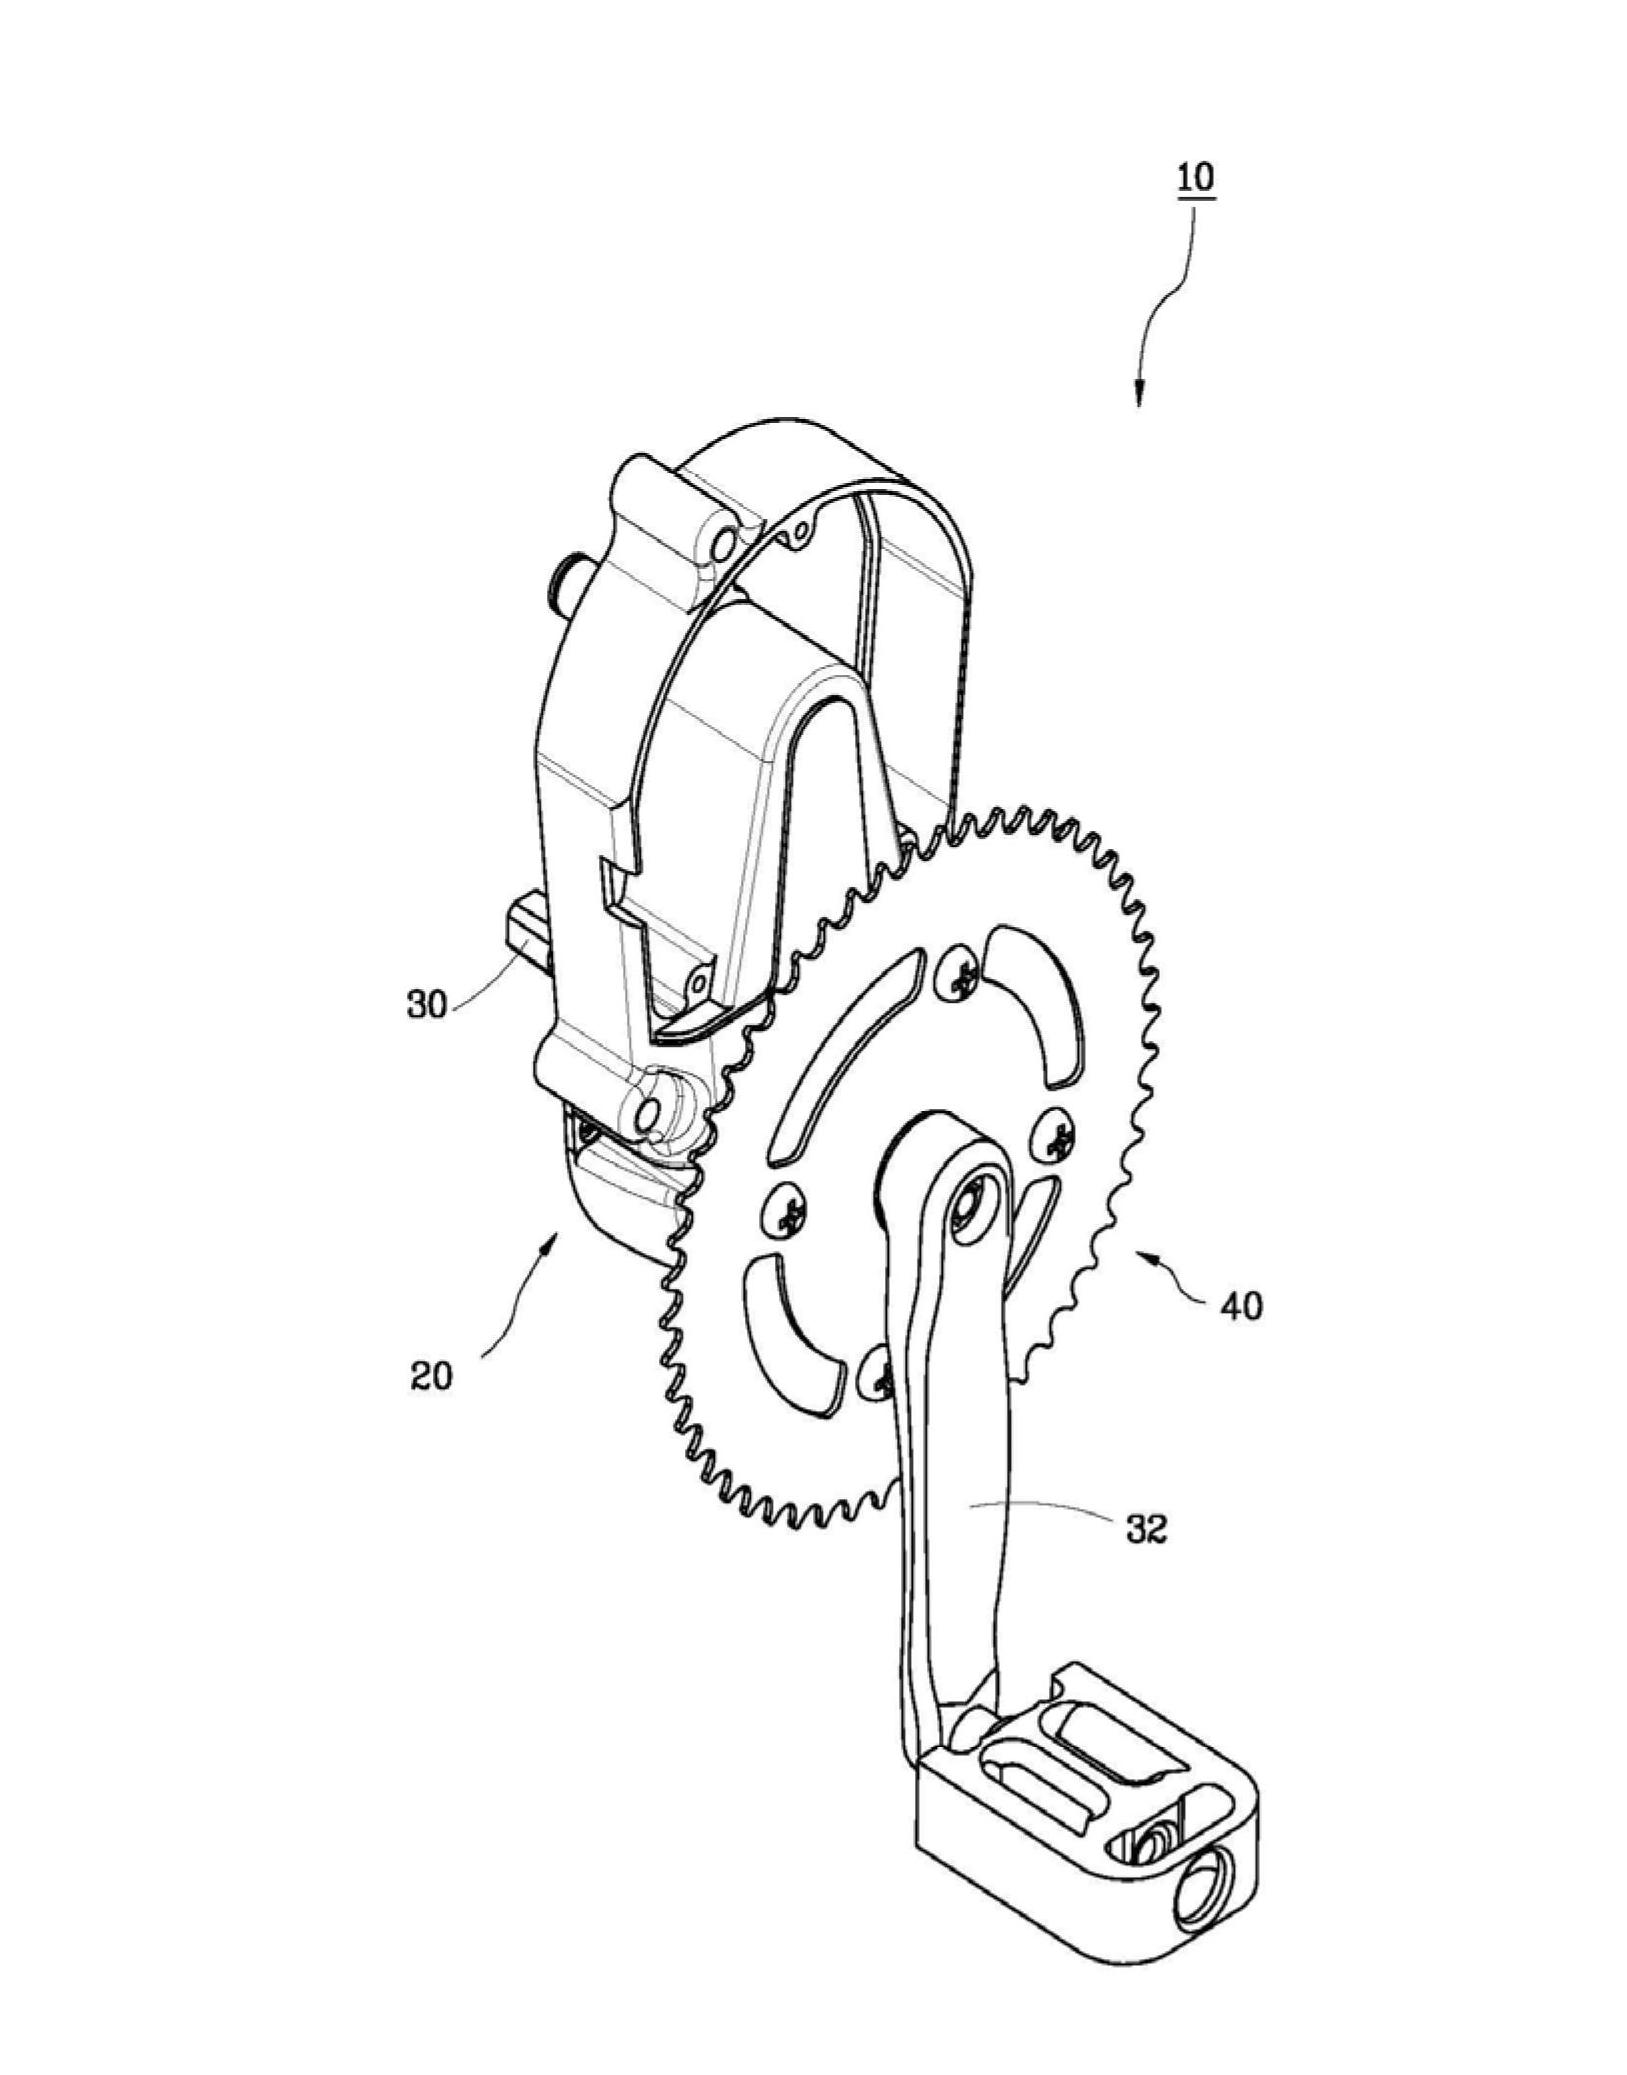 Anticlockwise-rotation braking mechanism of electric bicycle